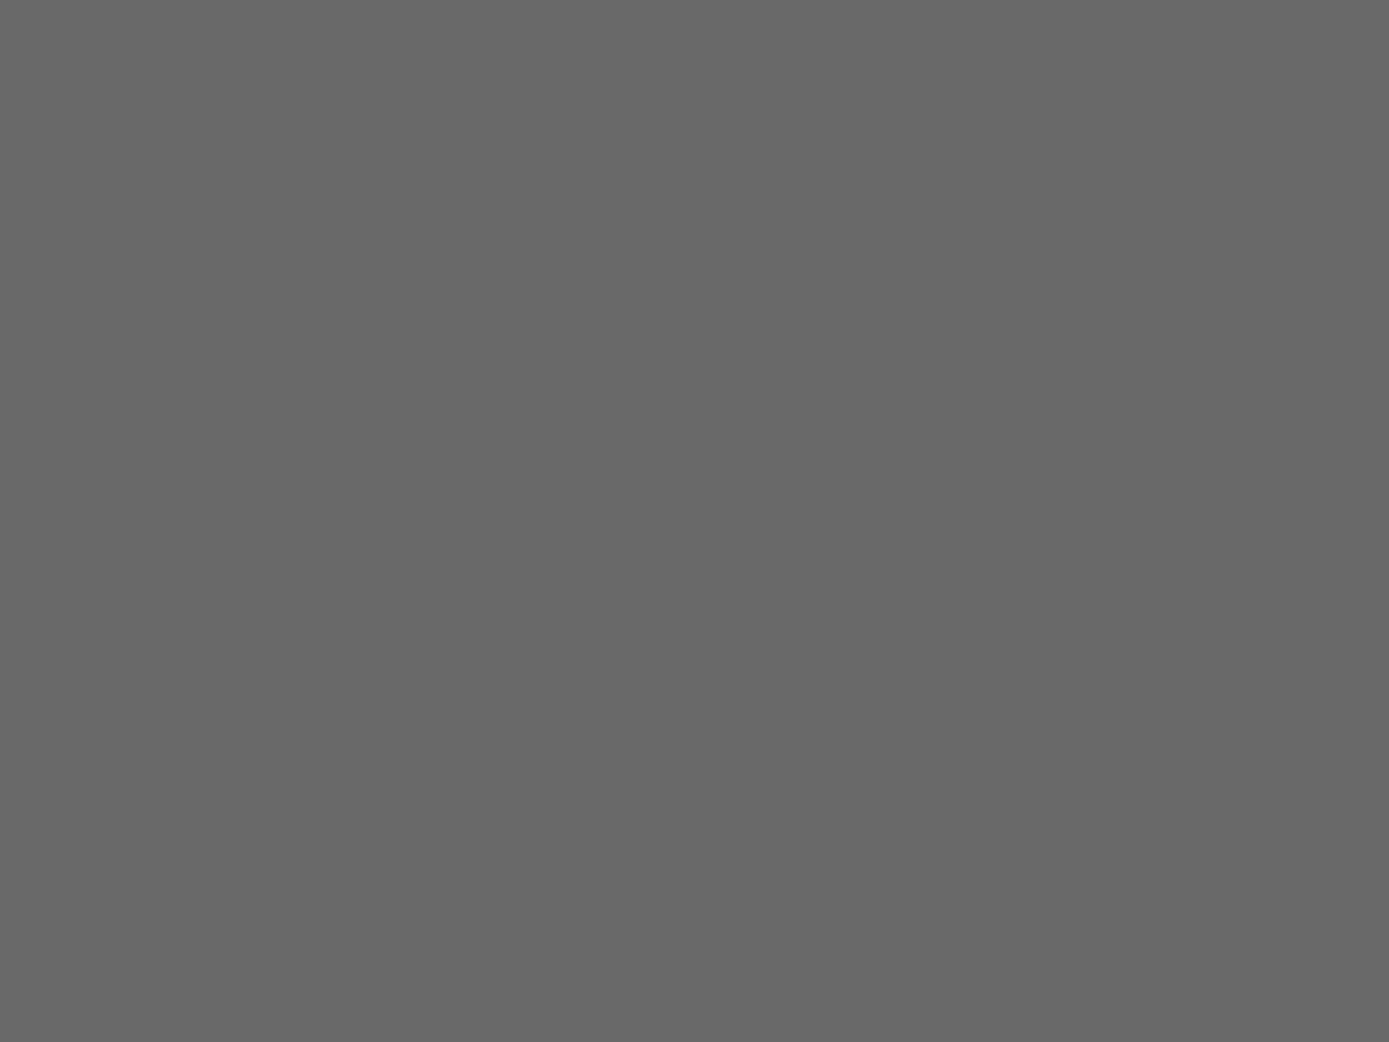 Кадр из художественного фильма Юрия Грымова «Три сестры». 2017 год. Фотография: <a href="https://www.modern-theatre.ru/repertuar/tri-sestry.html" target="_blank">modern-theatre.ru</a>